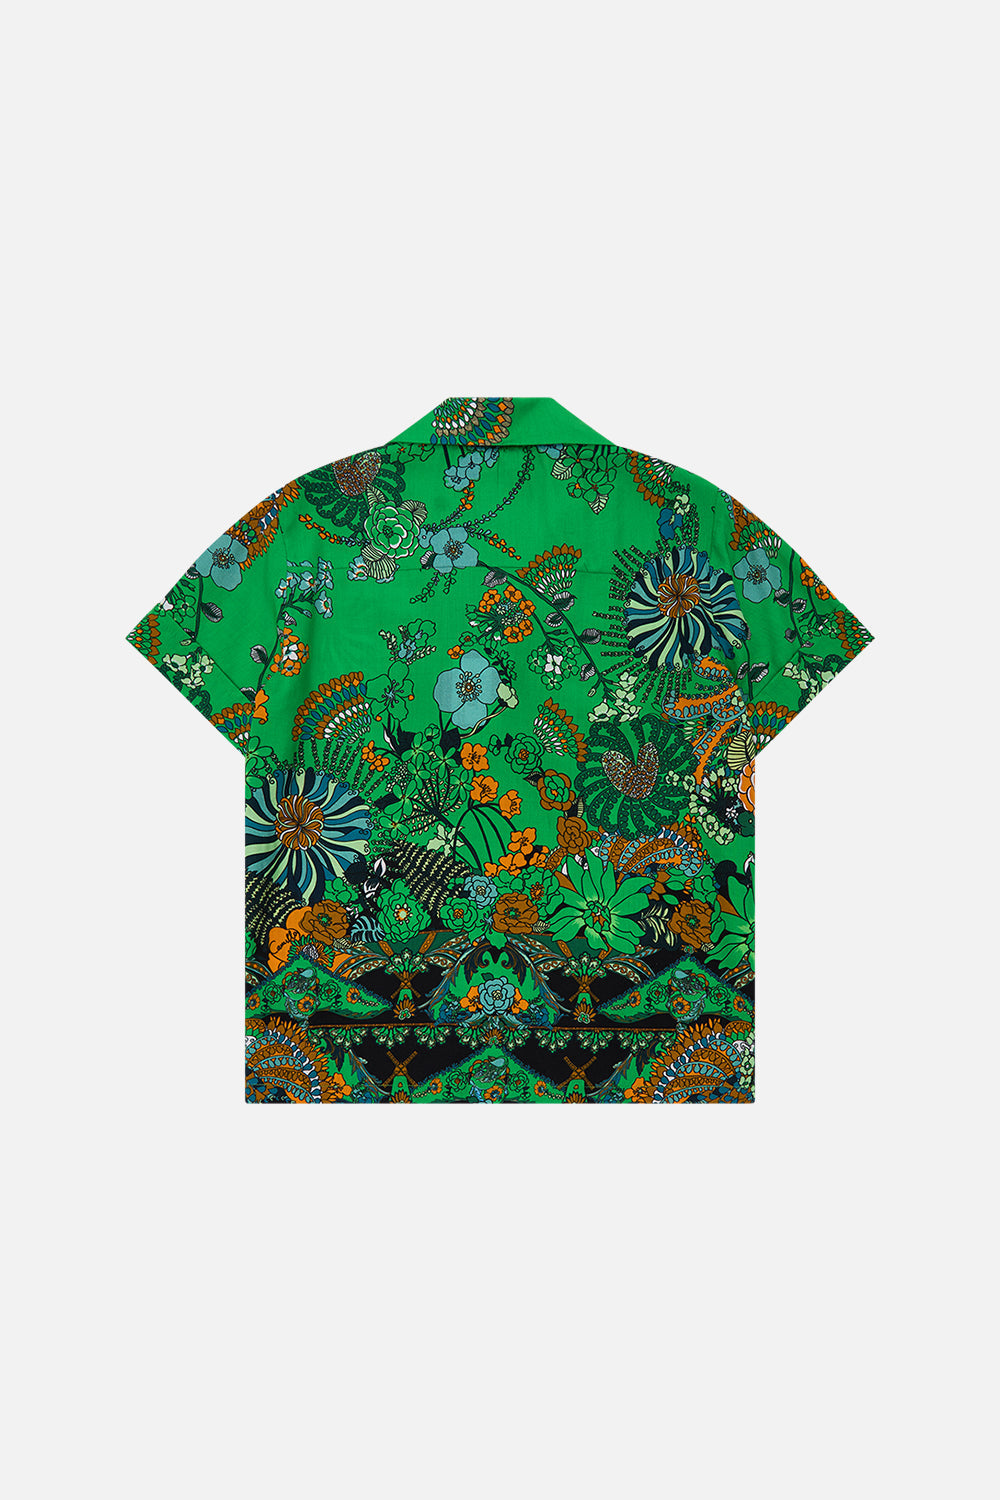 Milla by CAMILLA green short sleeve shirt in Good Vibes Generation